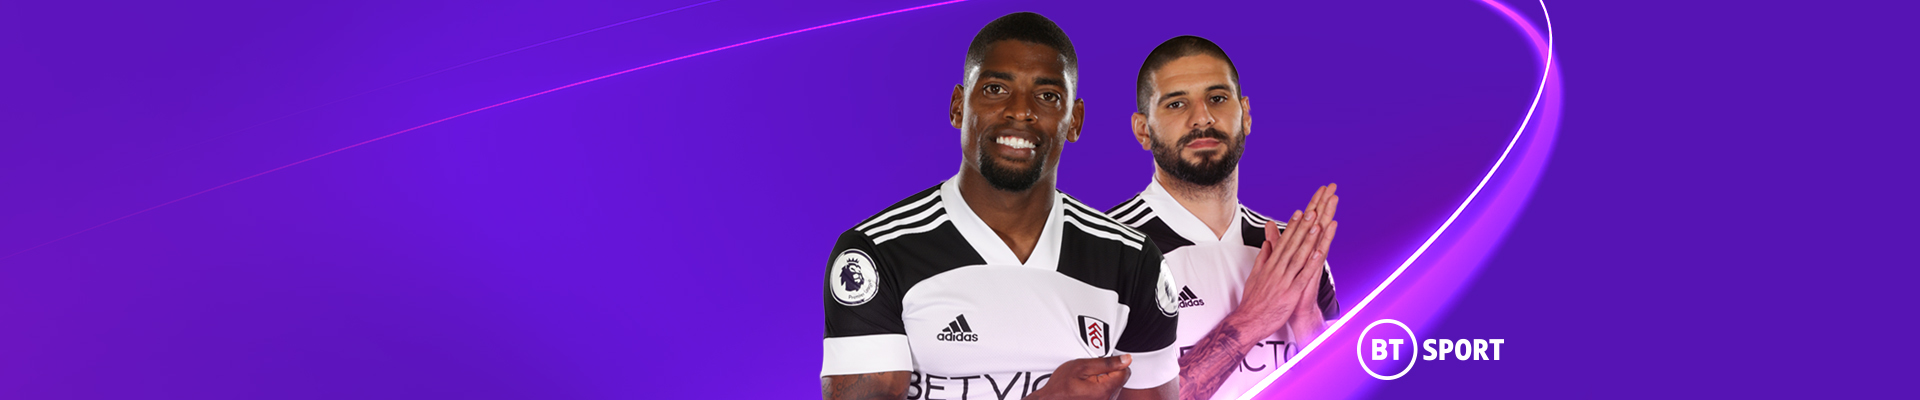 Fulham FC | BT Sport